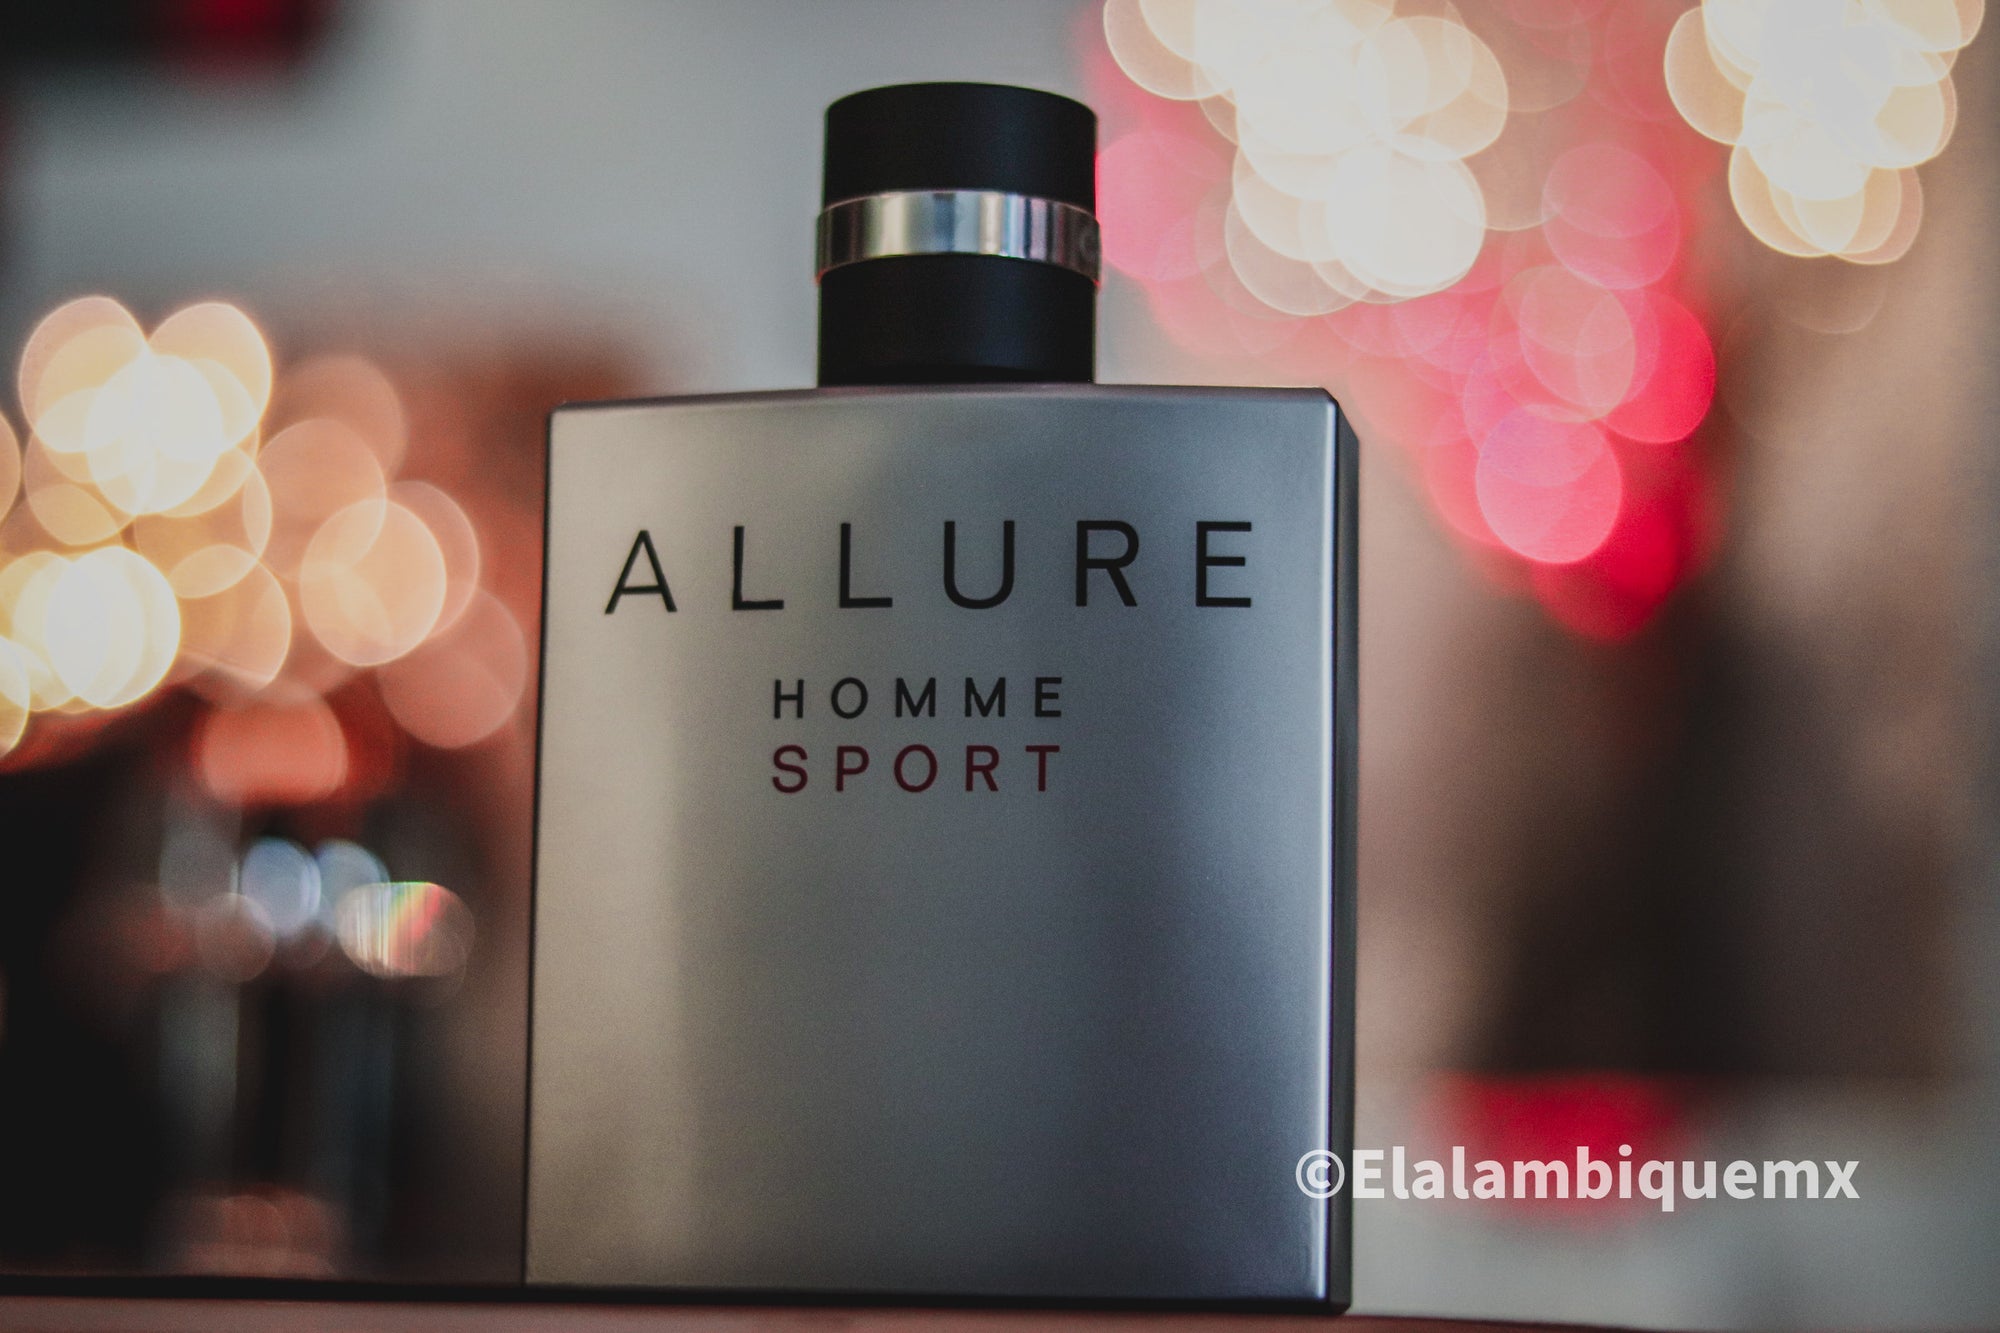 Chanel Allure Homme Sport, Mens Perfume, Eau De Toilette Editorial Photo -  Image of carnival, human: 136398726